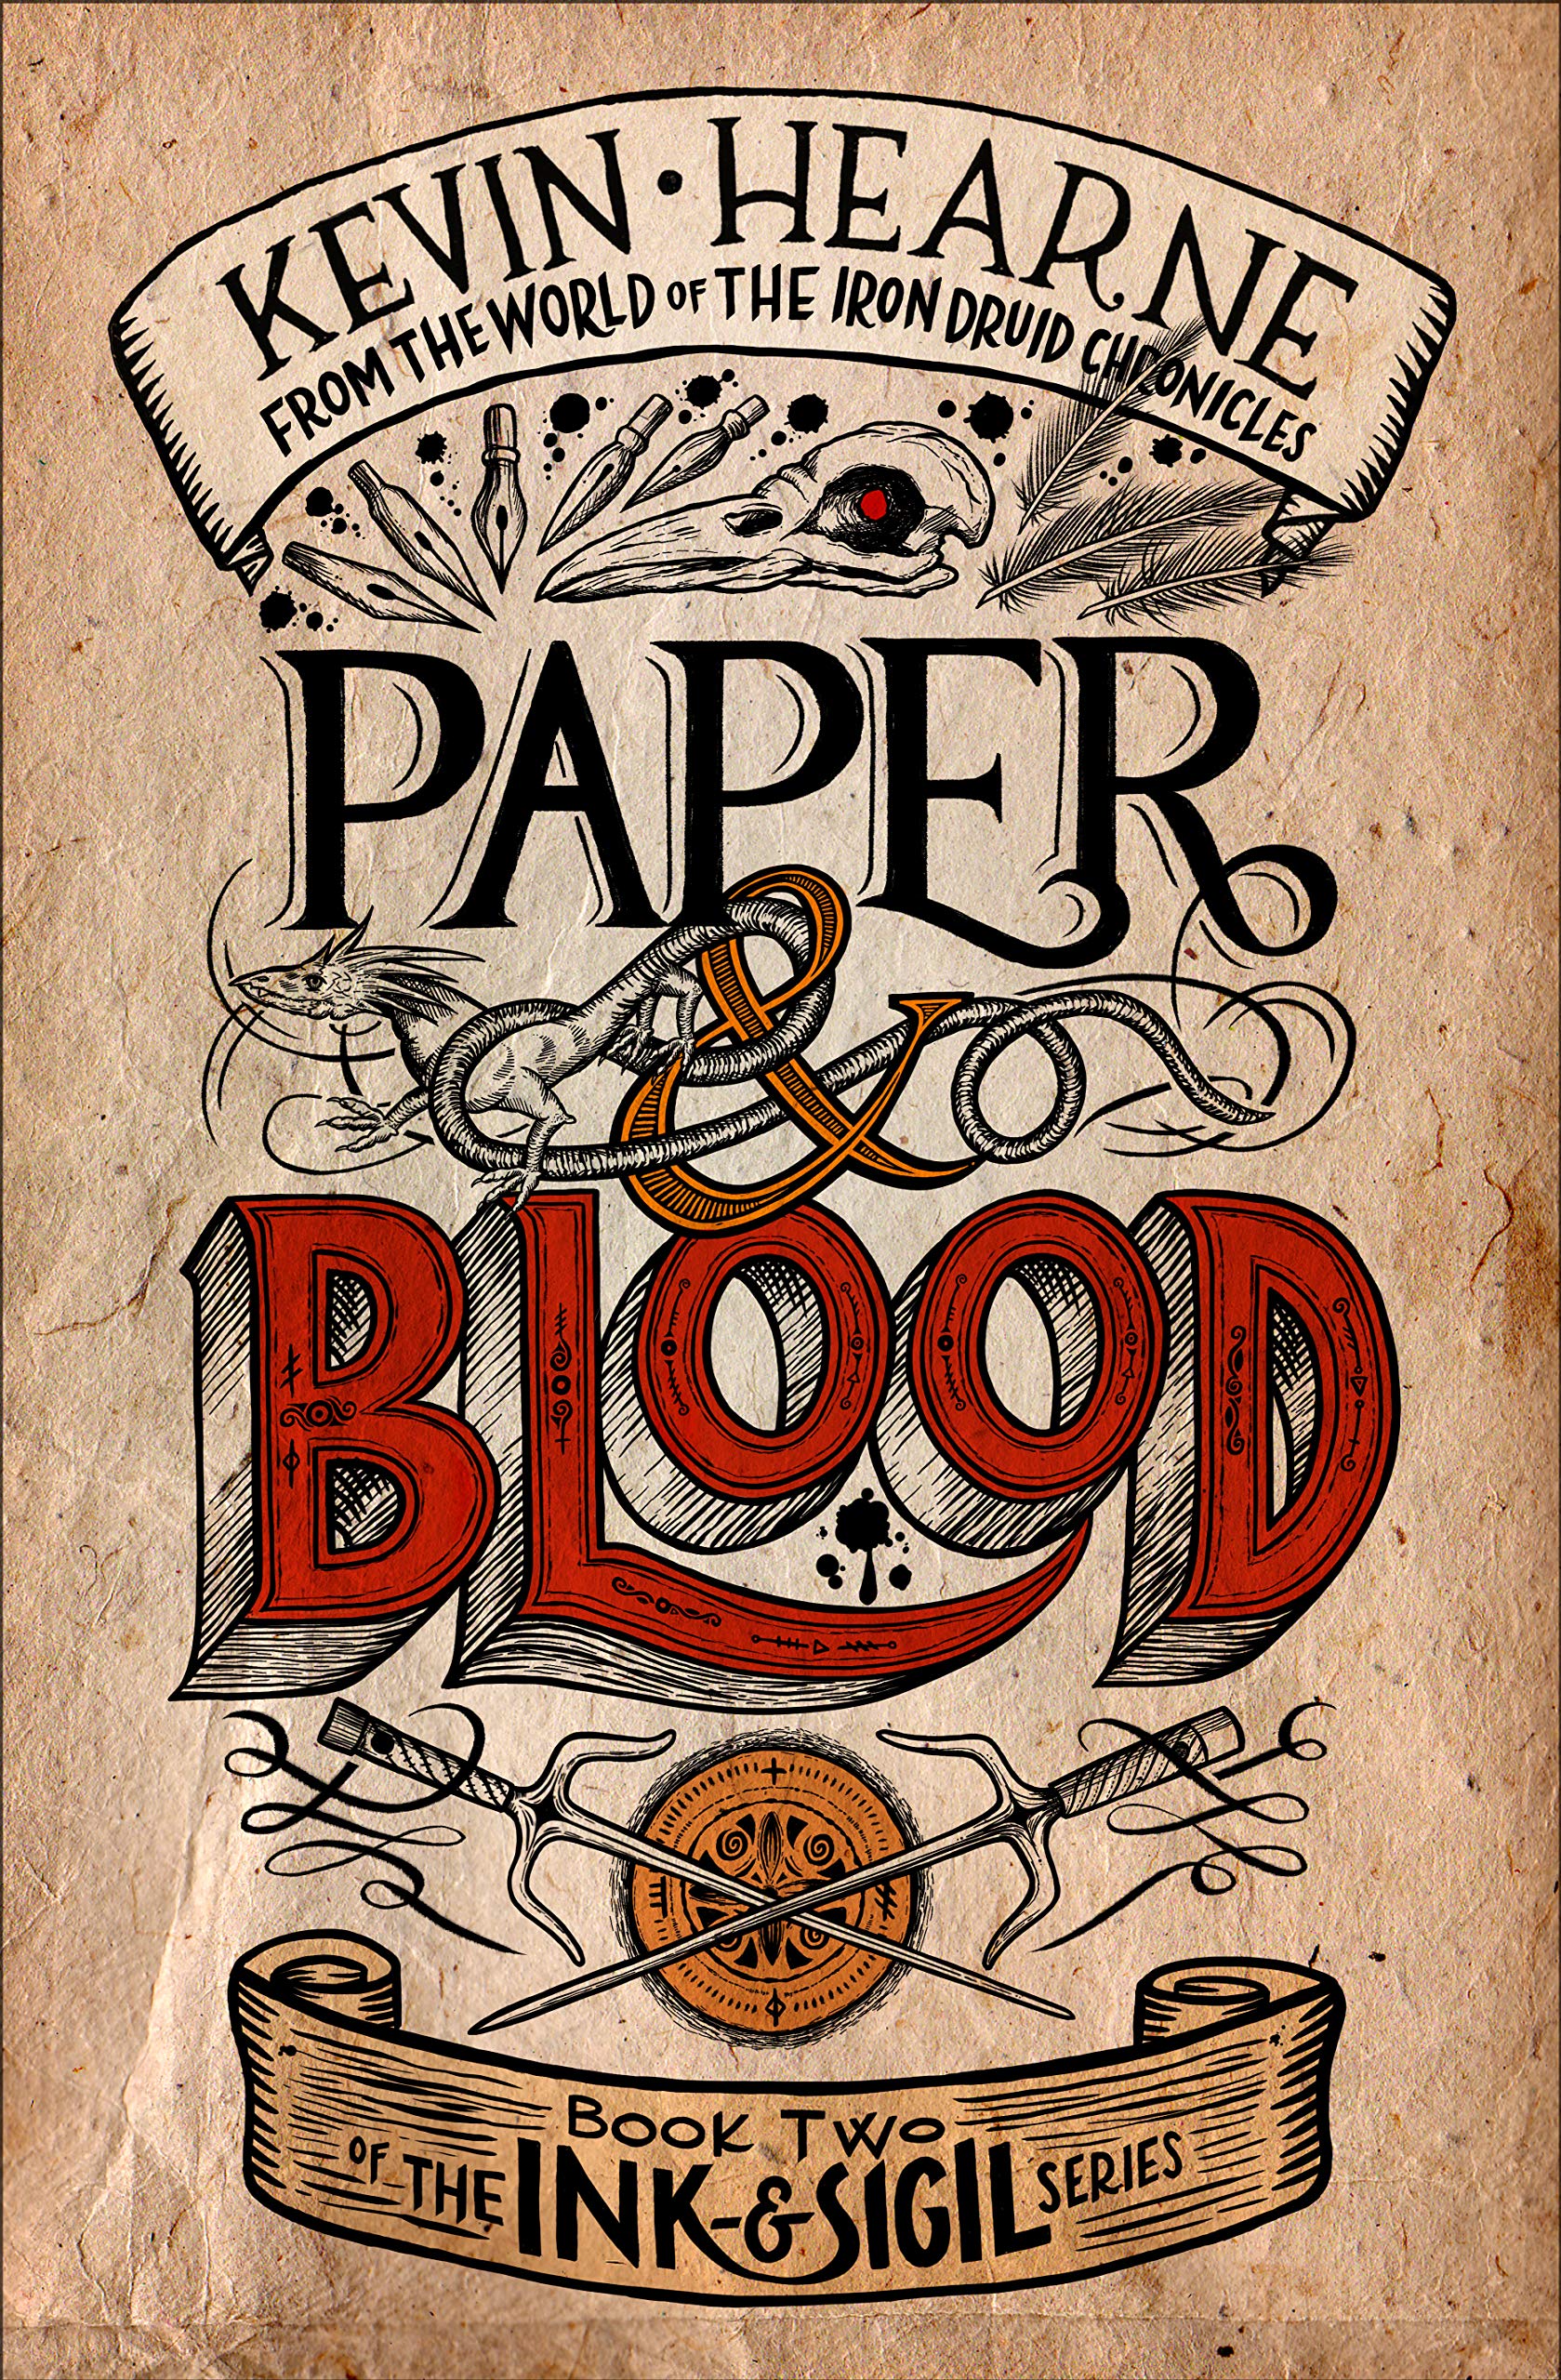 [EPUB] Ink & Sigil #2 Paper & Blood by Kevin Hearne ,  Friedrich Mader  (Translator) ,  Tamara Rapp  (Translator)